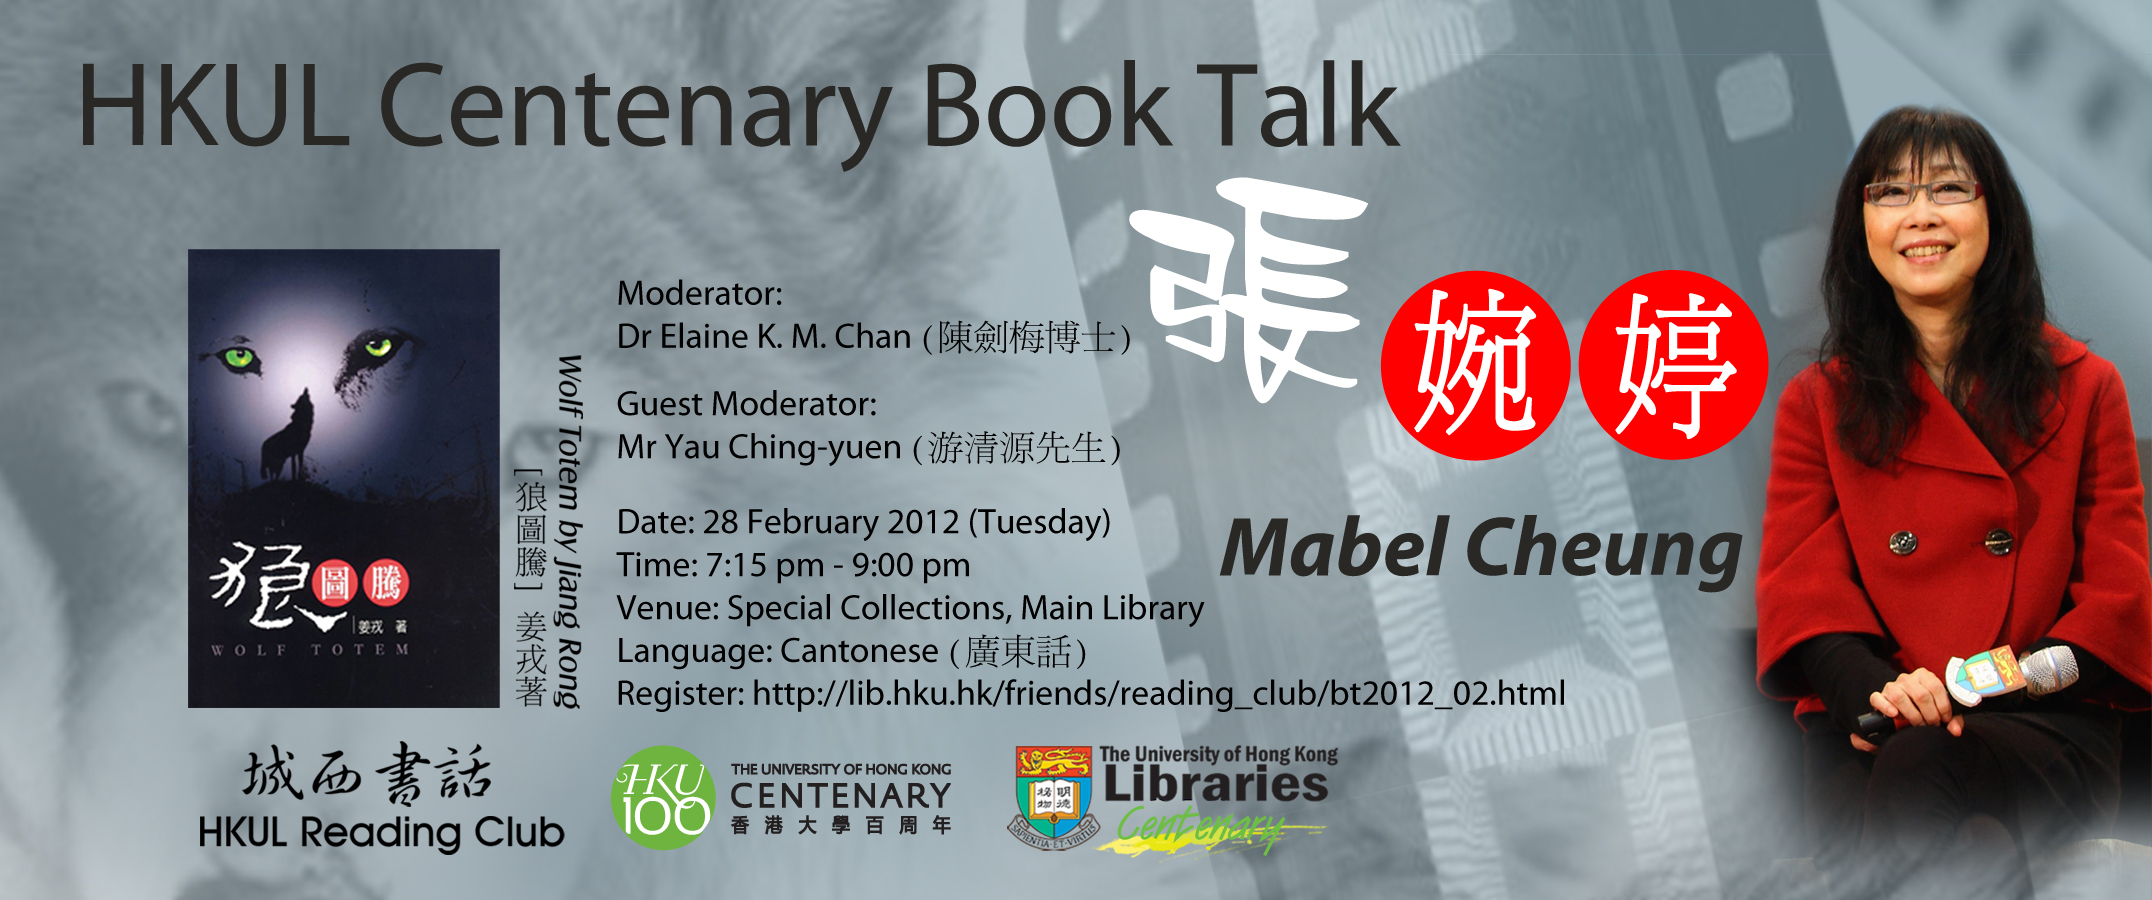 HKUL Centenary Book Talk: Mabel Cheung 張婉婷 on 《狼圖騰》(Wolf Totem)